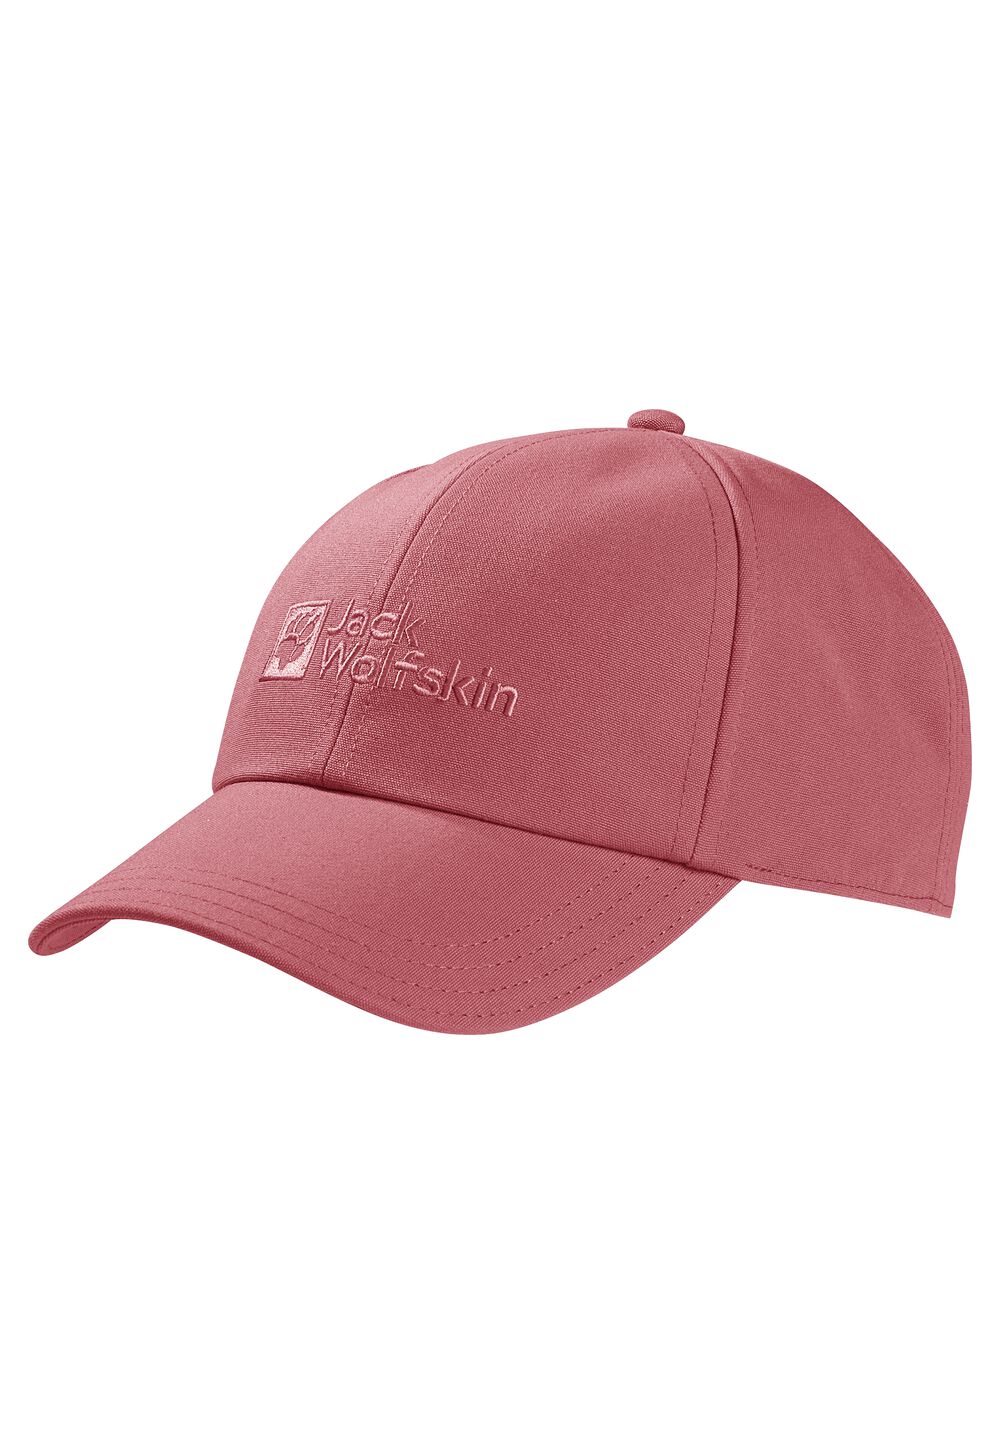 Jack Wolfskin Baseball Cap Basecap one size soft pink soft pink